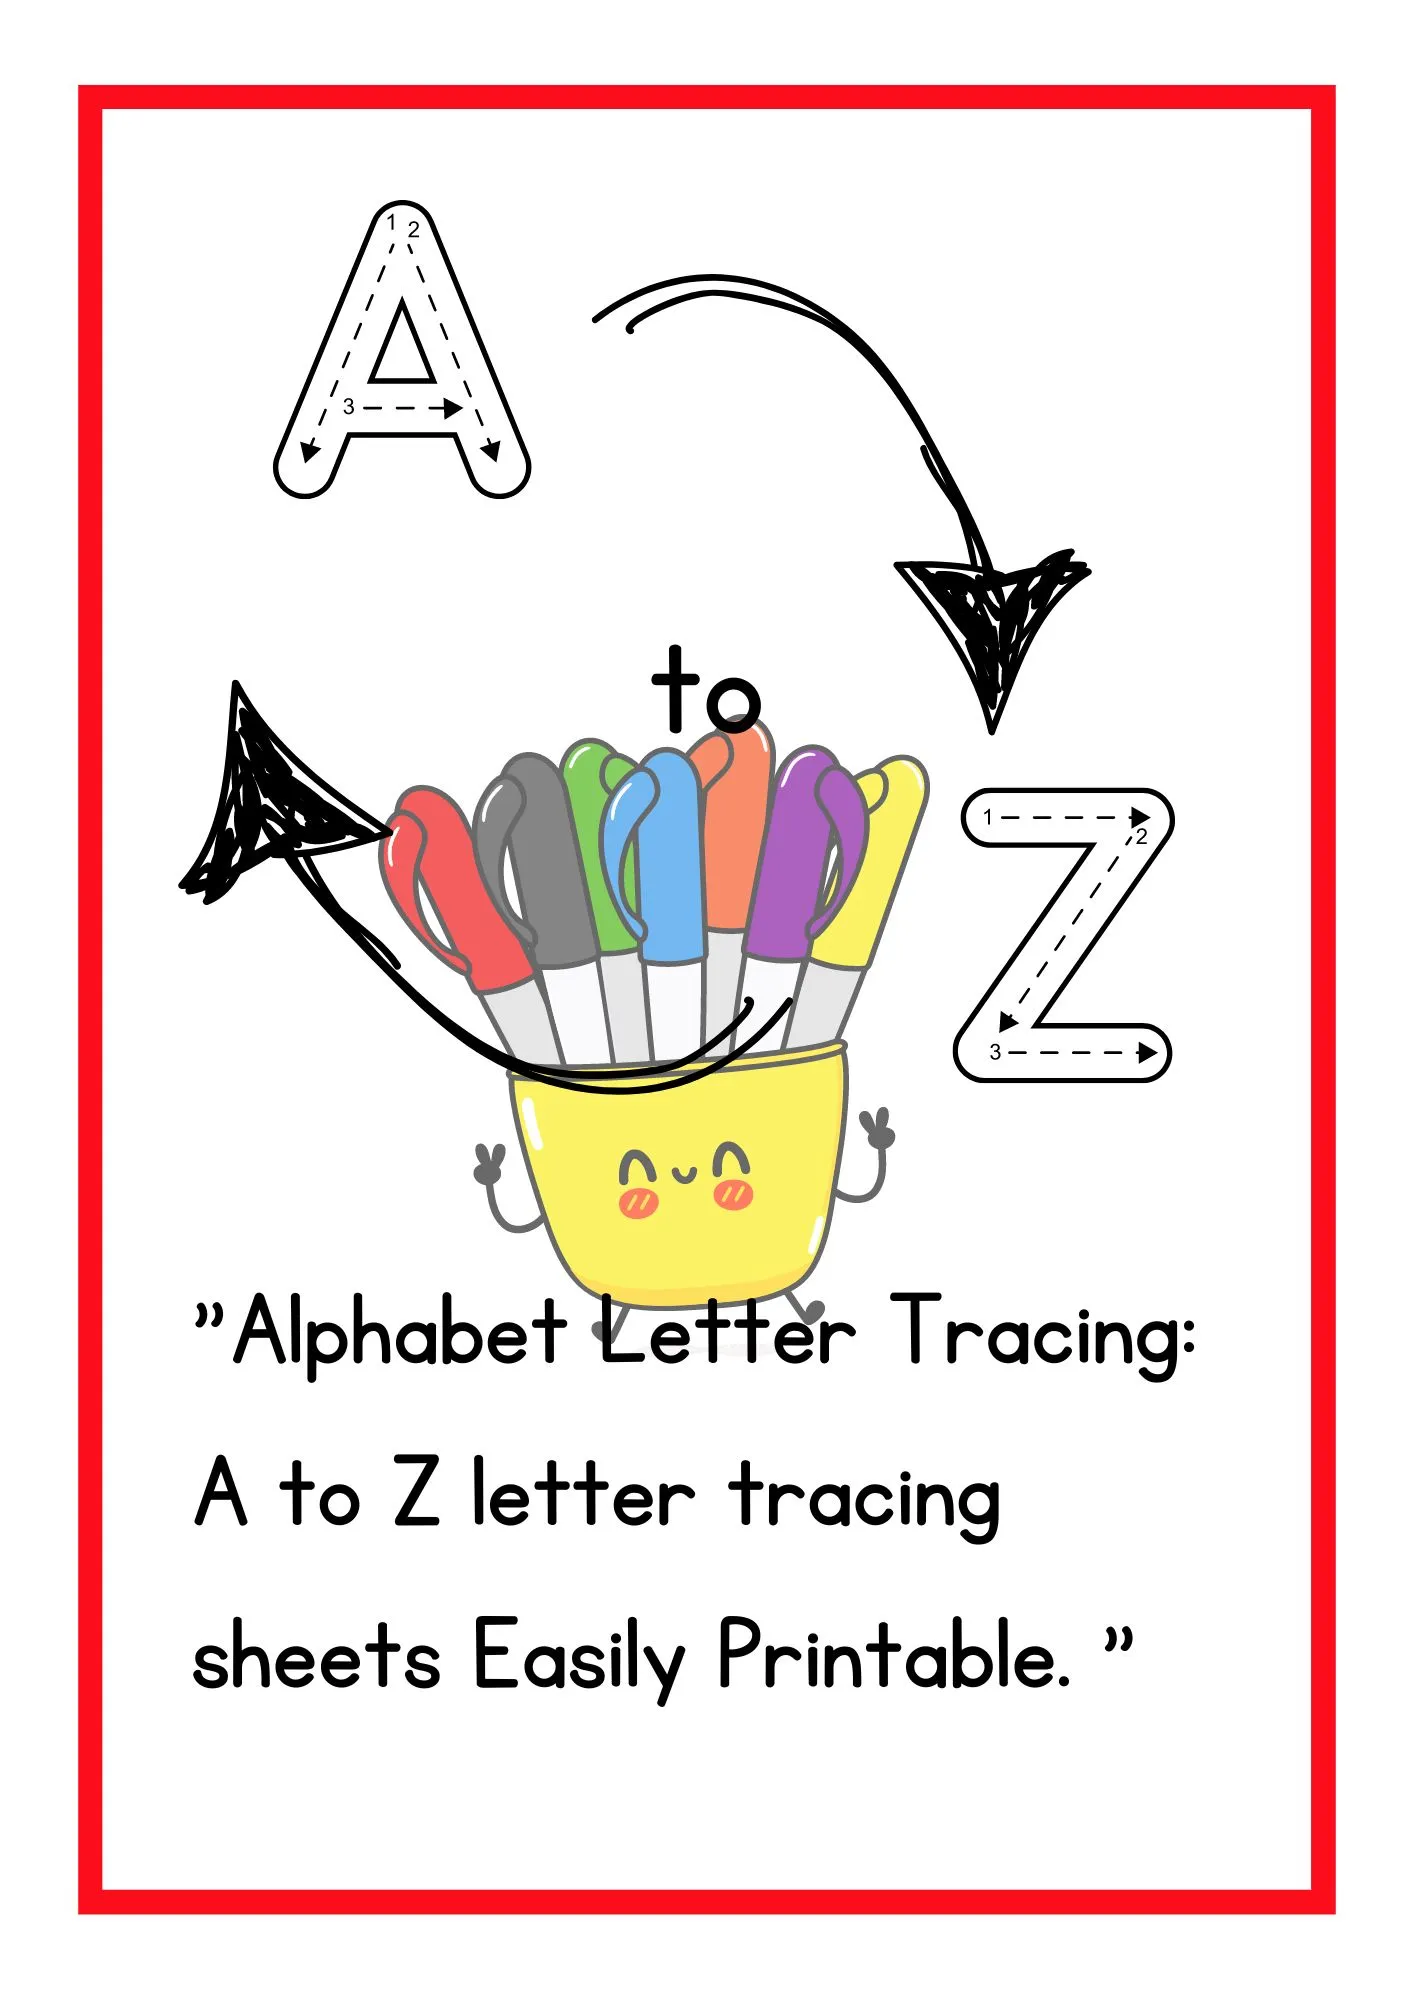 English Alphabet tracing lkg worksheets